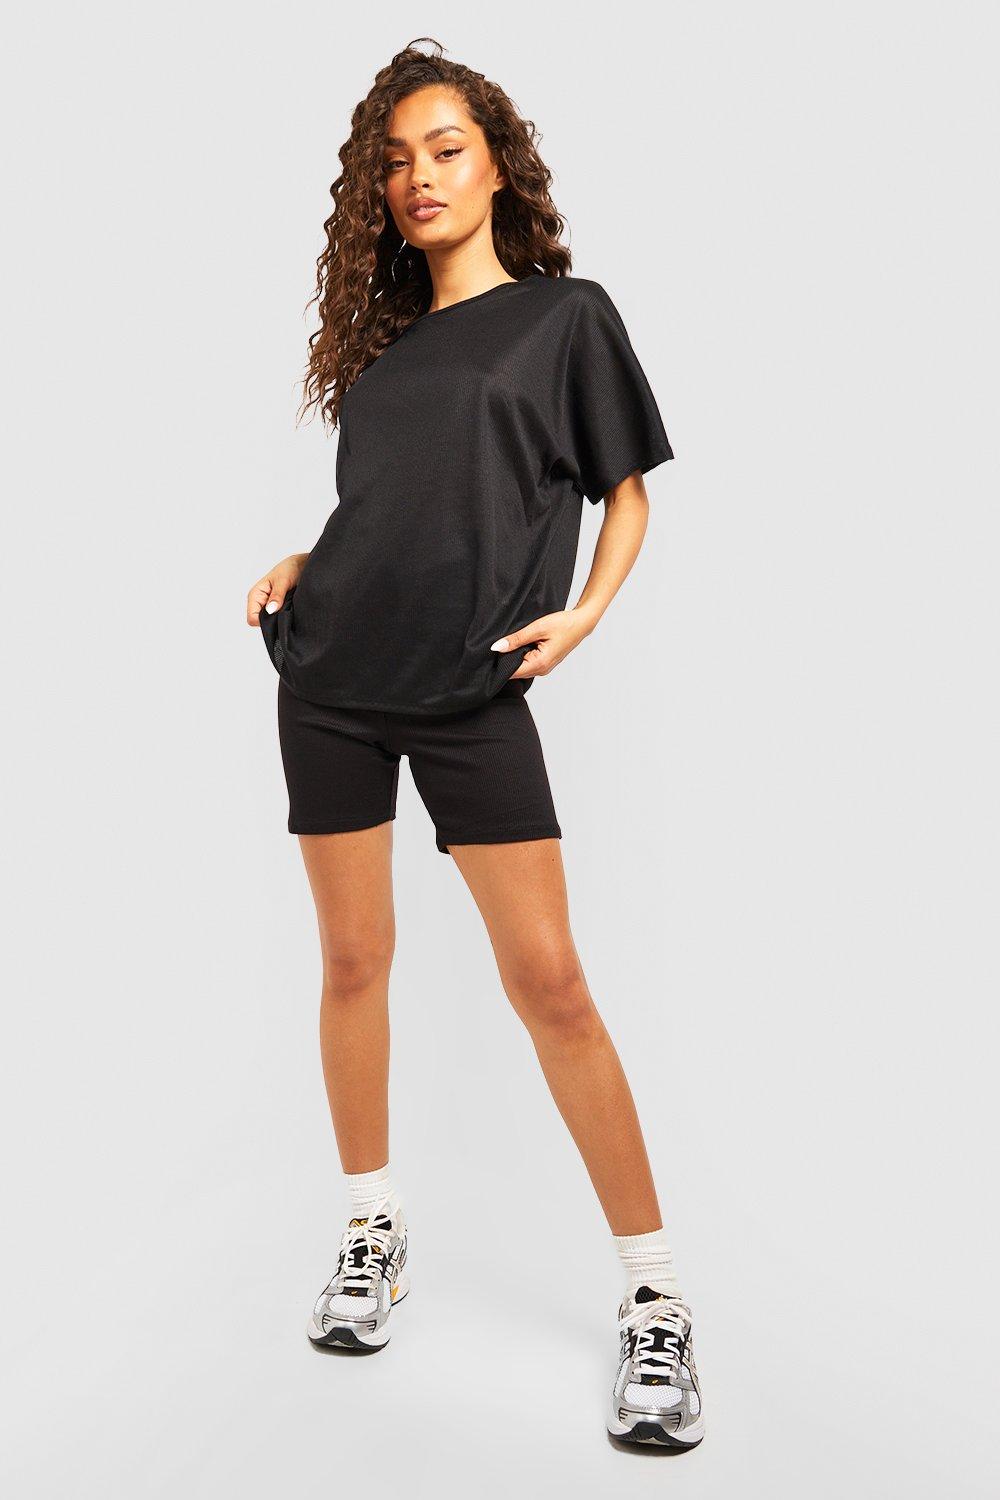 https://media.boohoo.com/i/boohoo/fzz60360_black_xl_2/female-black-oversized-t-shirt-&-biker-shorts-set